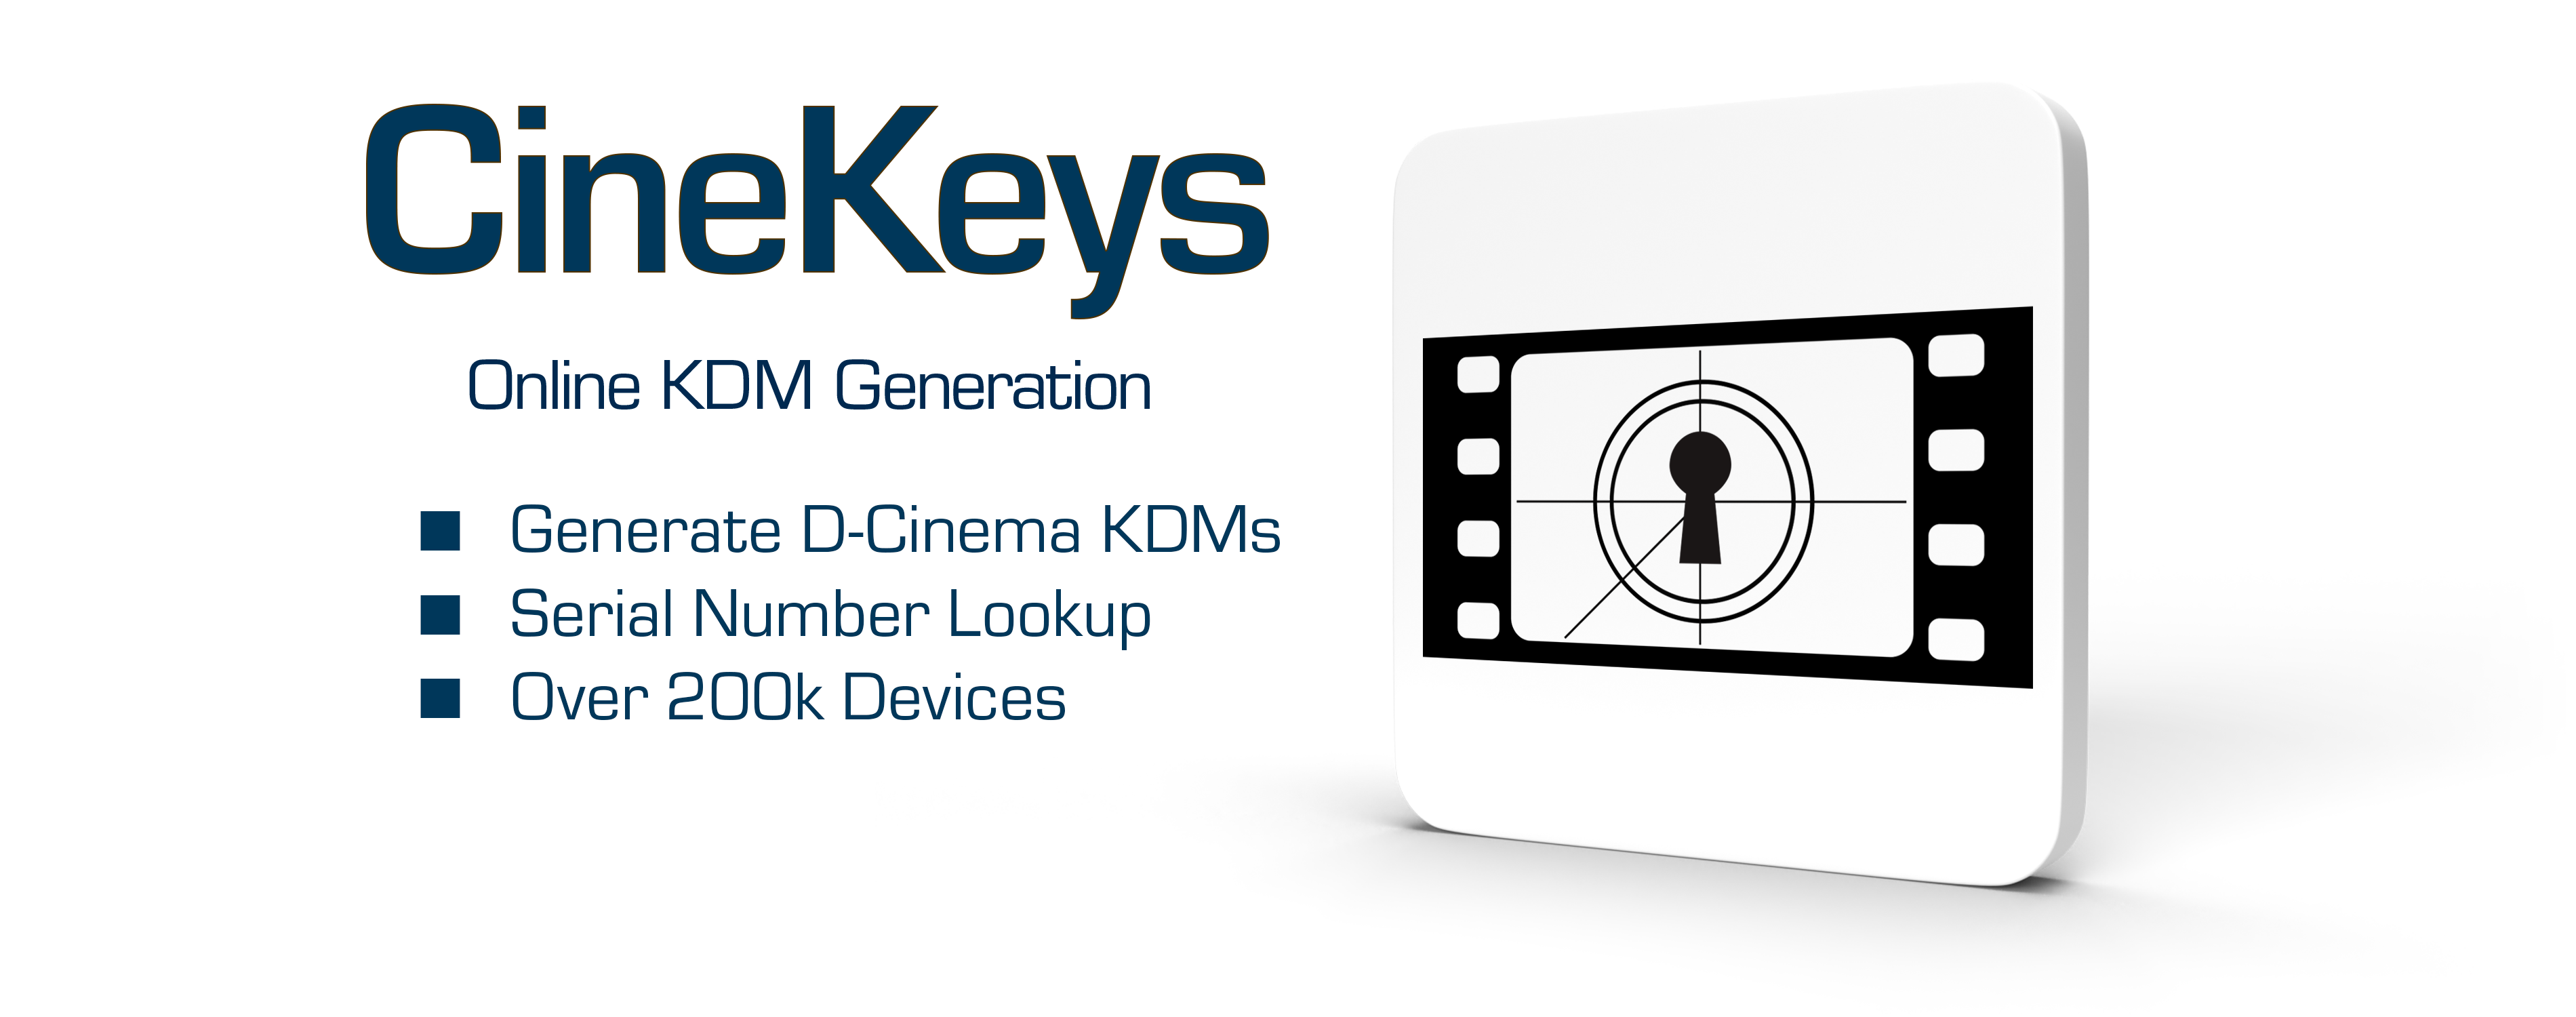 CineKeys - Online KDM Generation - Generate D-Cinema KDMs, Serial Number Lookup, Over 200k Devices.